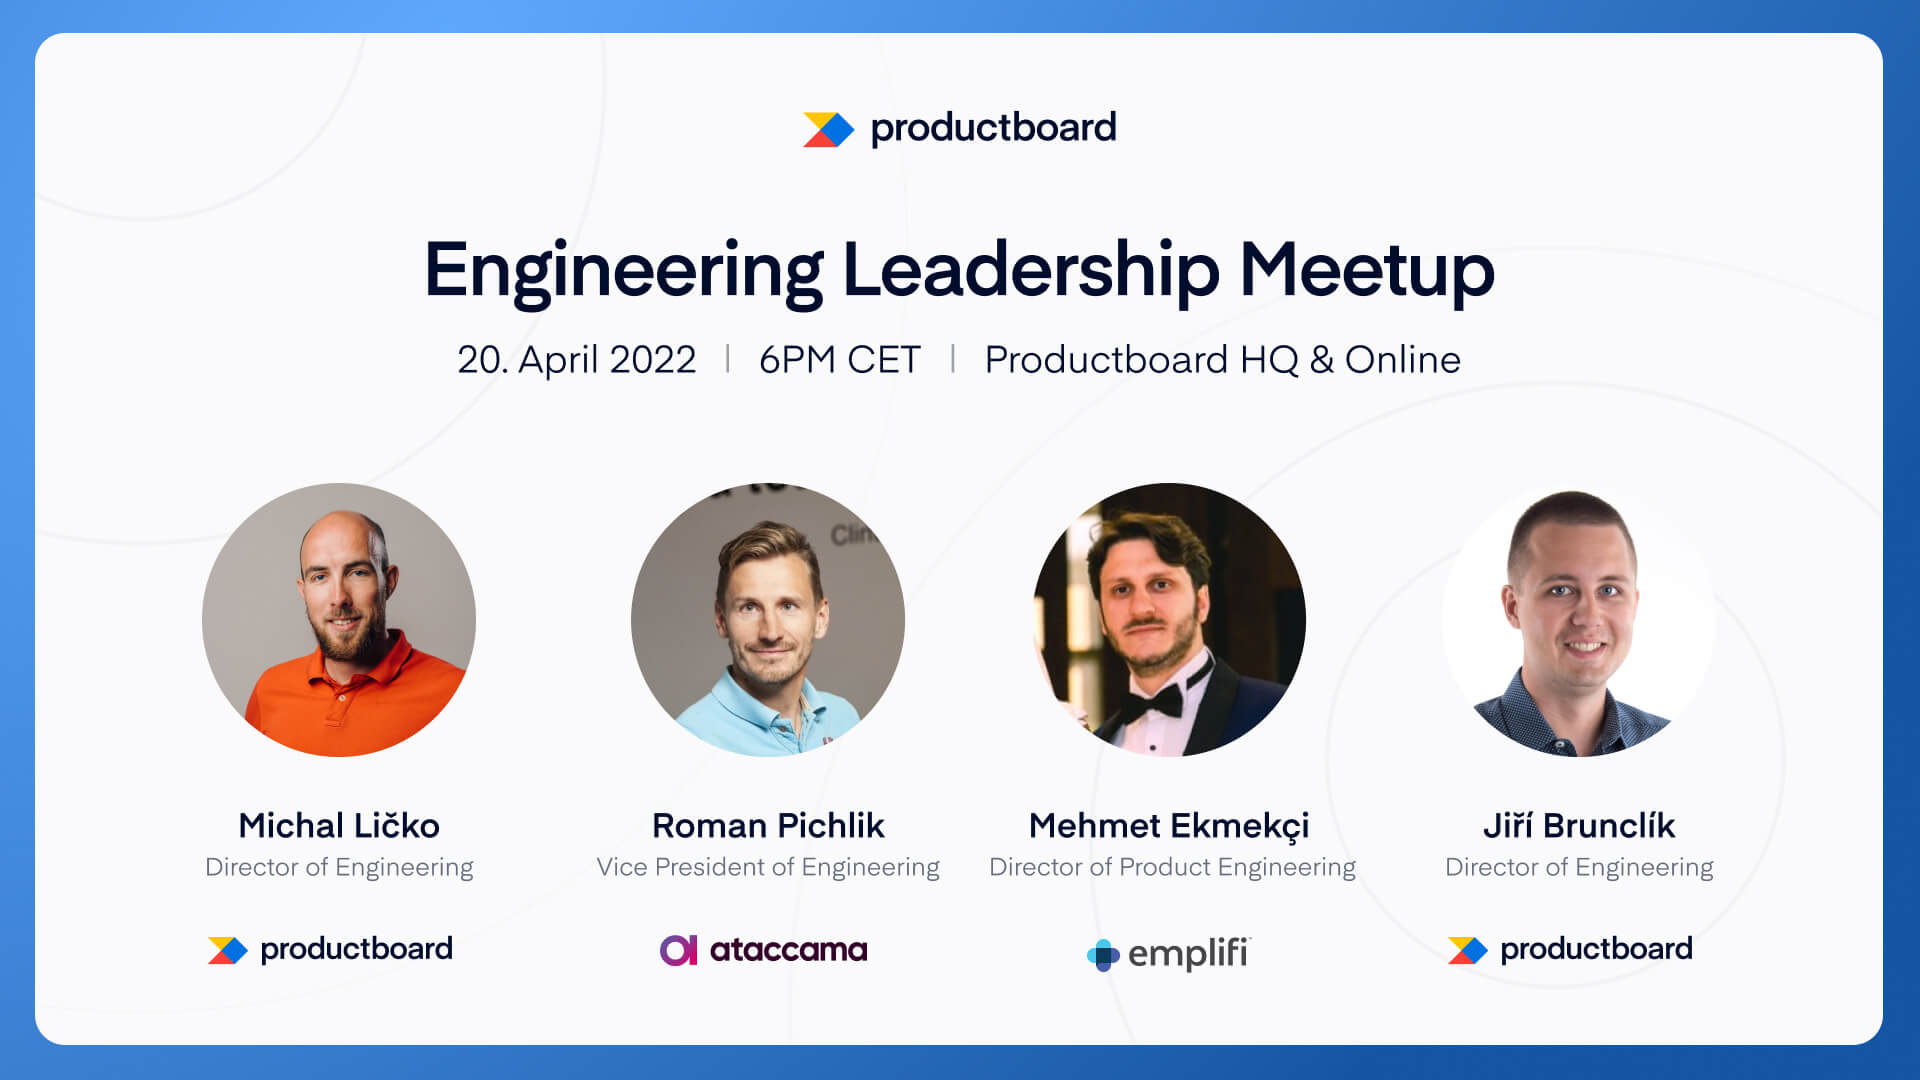 Engineering Leadership Meetup at Productboard is back!